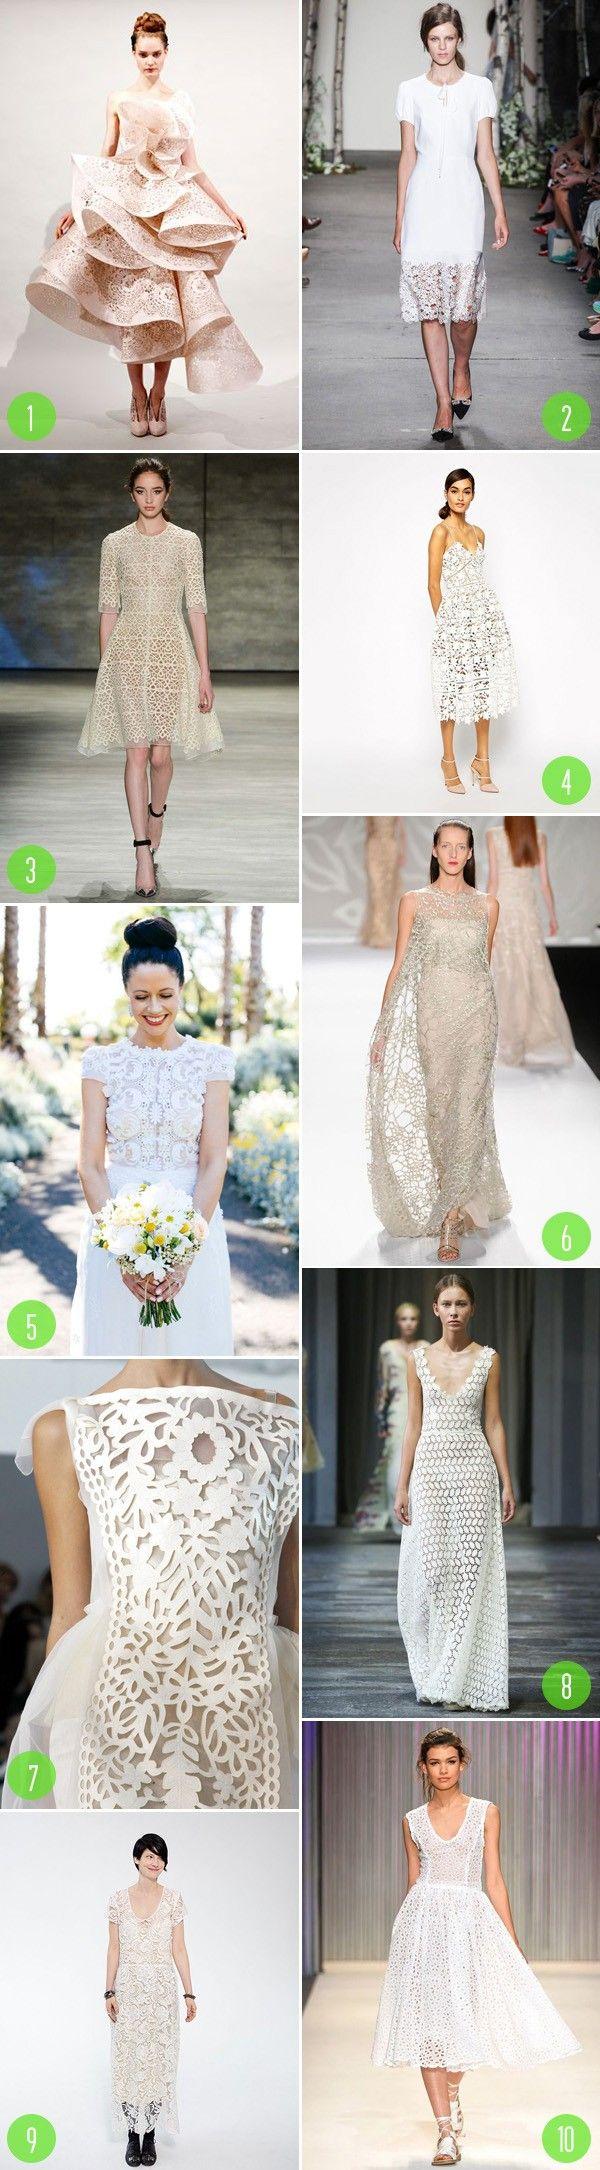 Wedding - Top 10: Modern Lacey Dresses